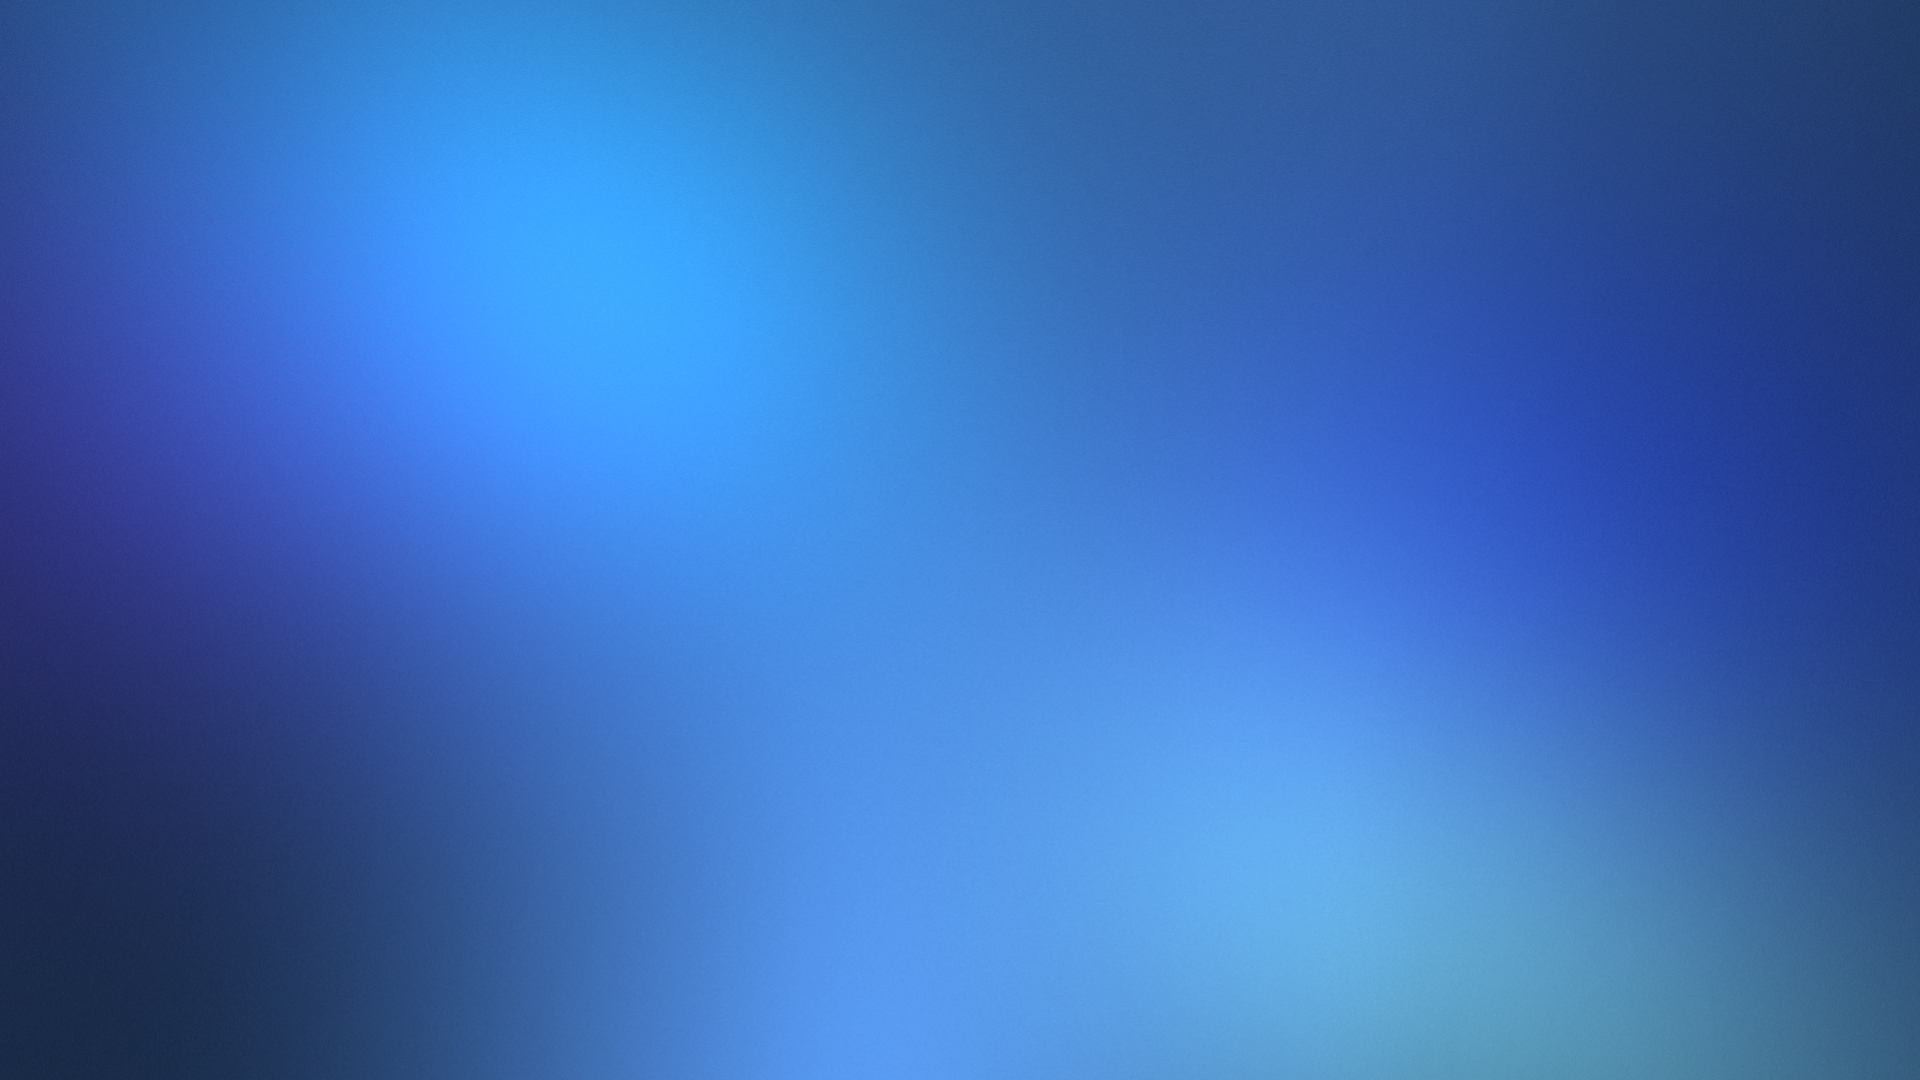 hd tablet wallpaper 1280x800,blau,himmel,kobaltblau,tagsüber,elektrisches blau